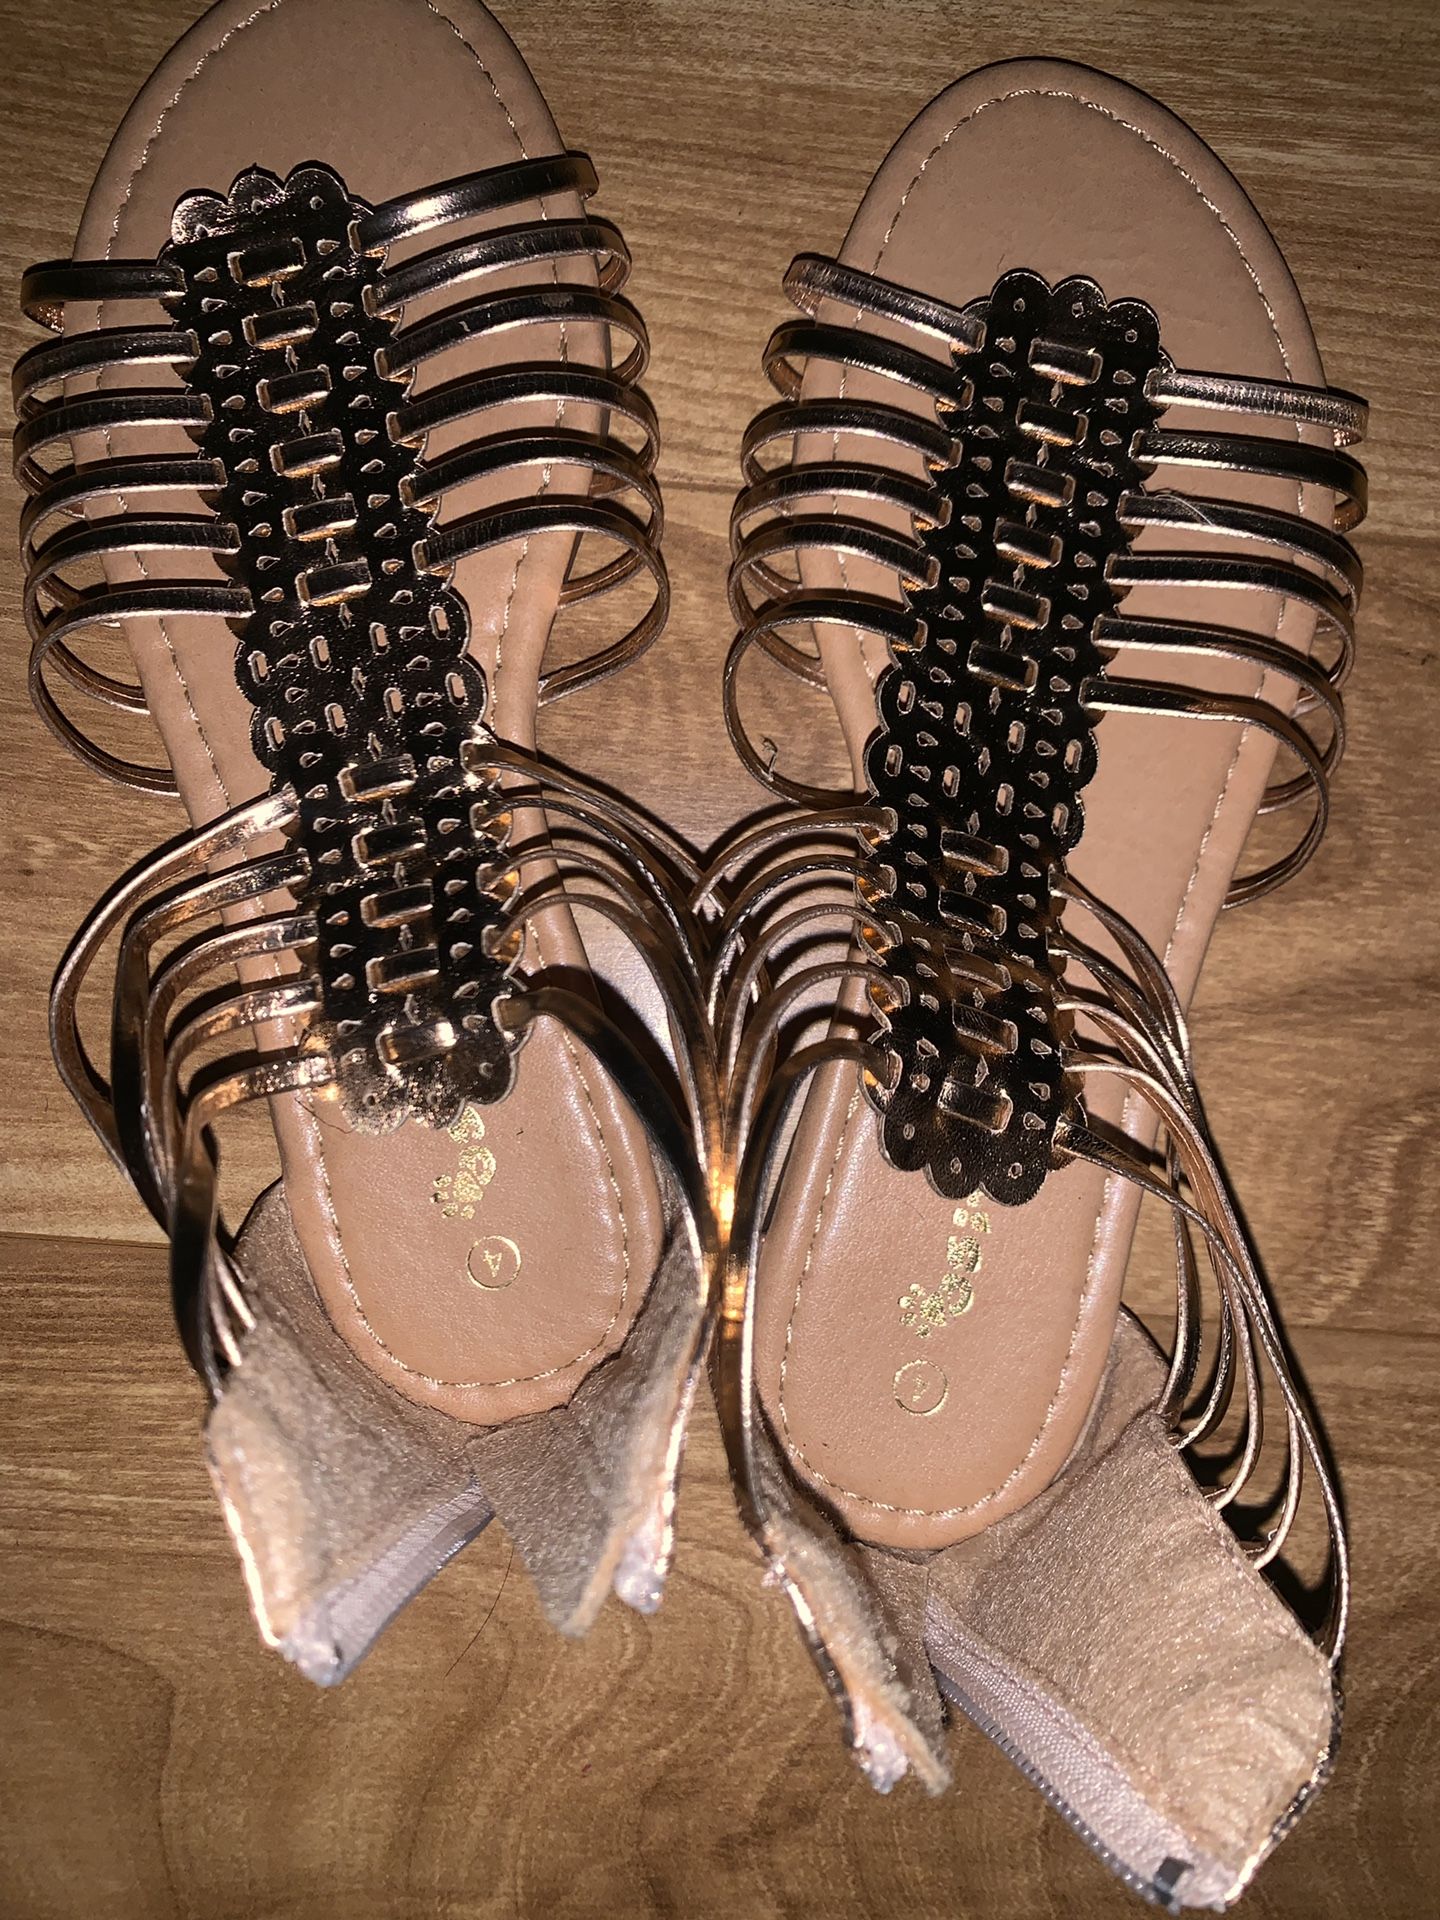 Girls new Sandals size 4